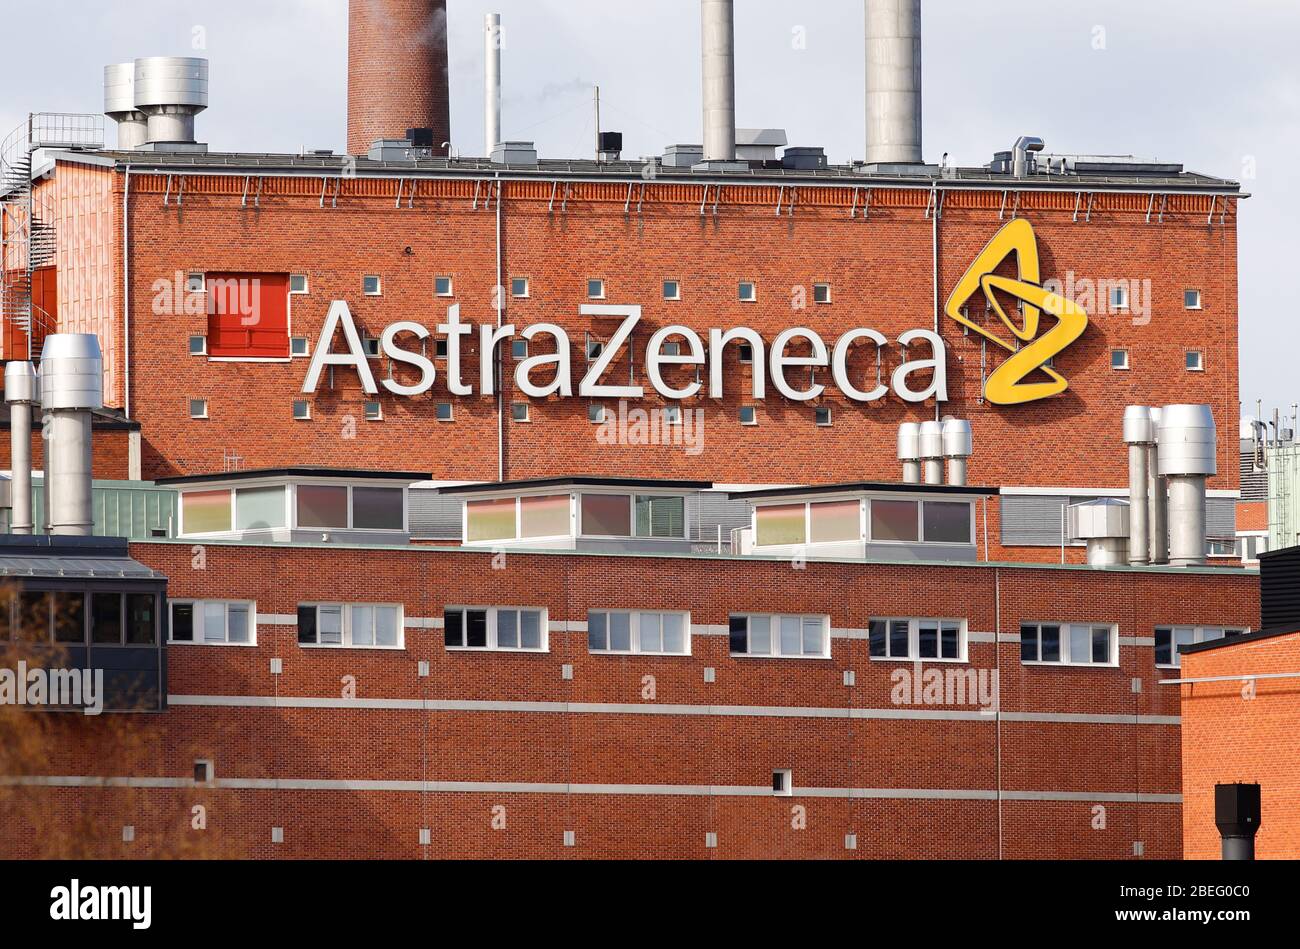 Sodertalje, Sweden - April 13, 2020: Extrior view of the multinational pharmaceutical and biopharmaceutical company AstraZeneca production plant locat Stock Photo